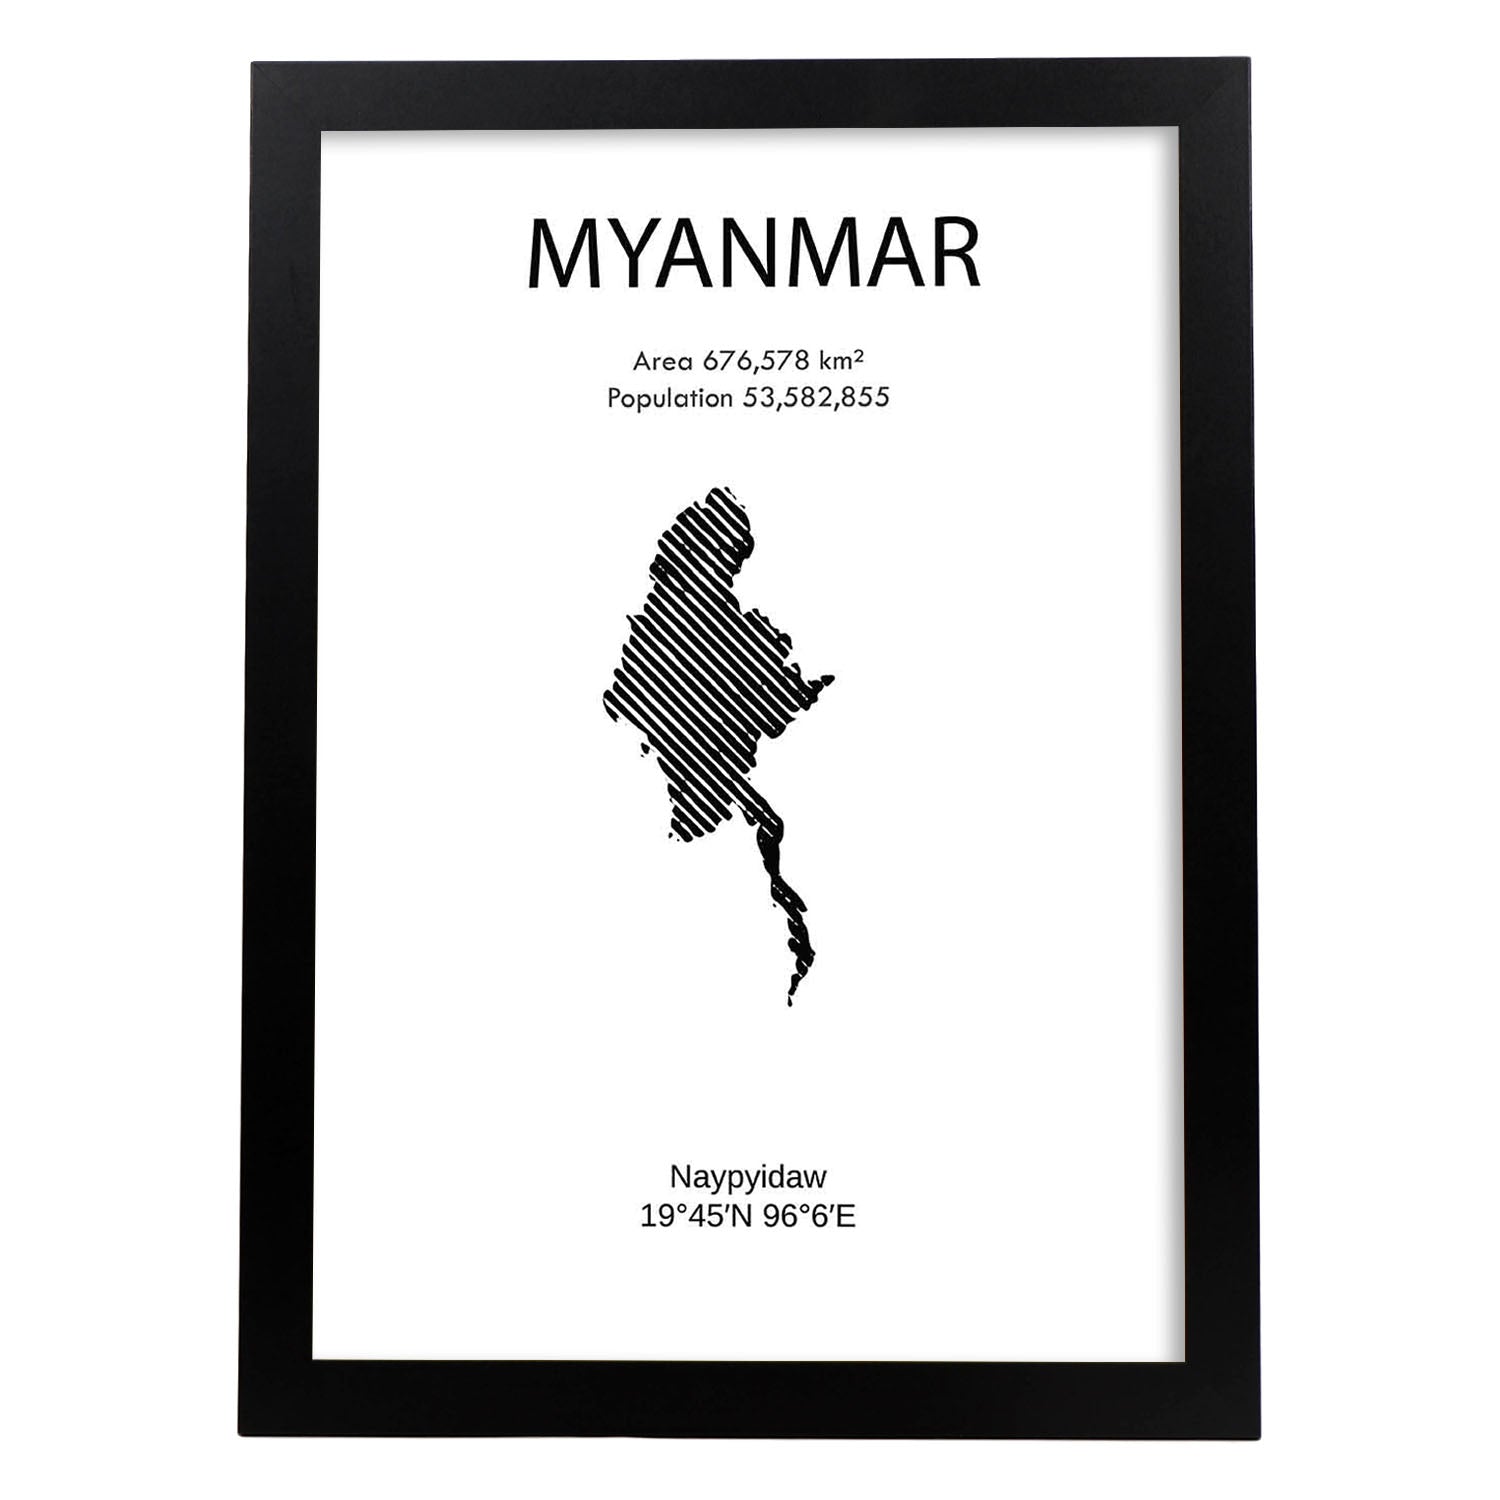 Poster de Myanmar. Láminas de paises y continentes del mundo.-Artwork-Nacnic-A3-Marco Negro-Nacnic Estudio SL